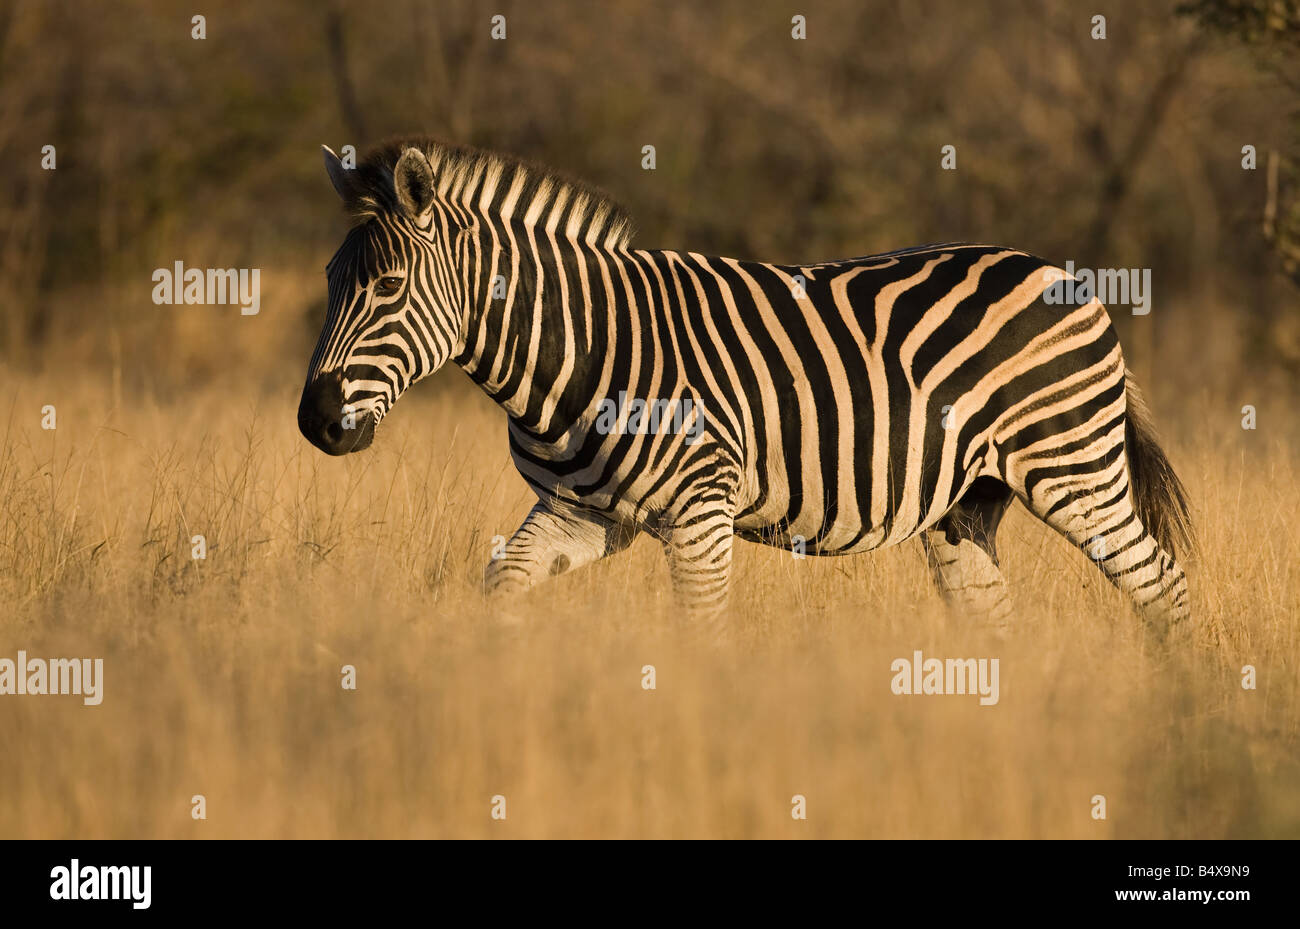 Zebra walking in grass Stock Photo